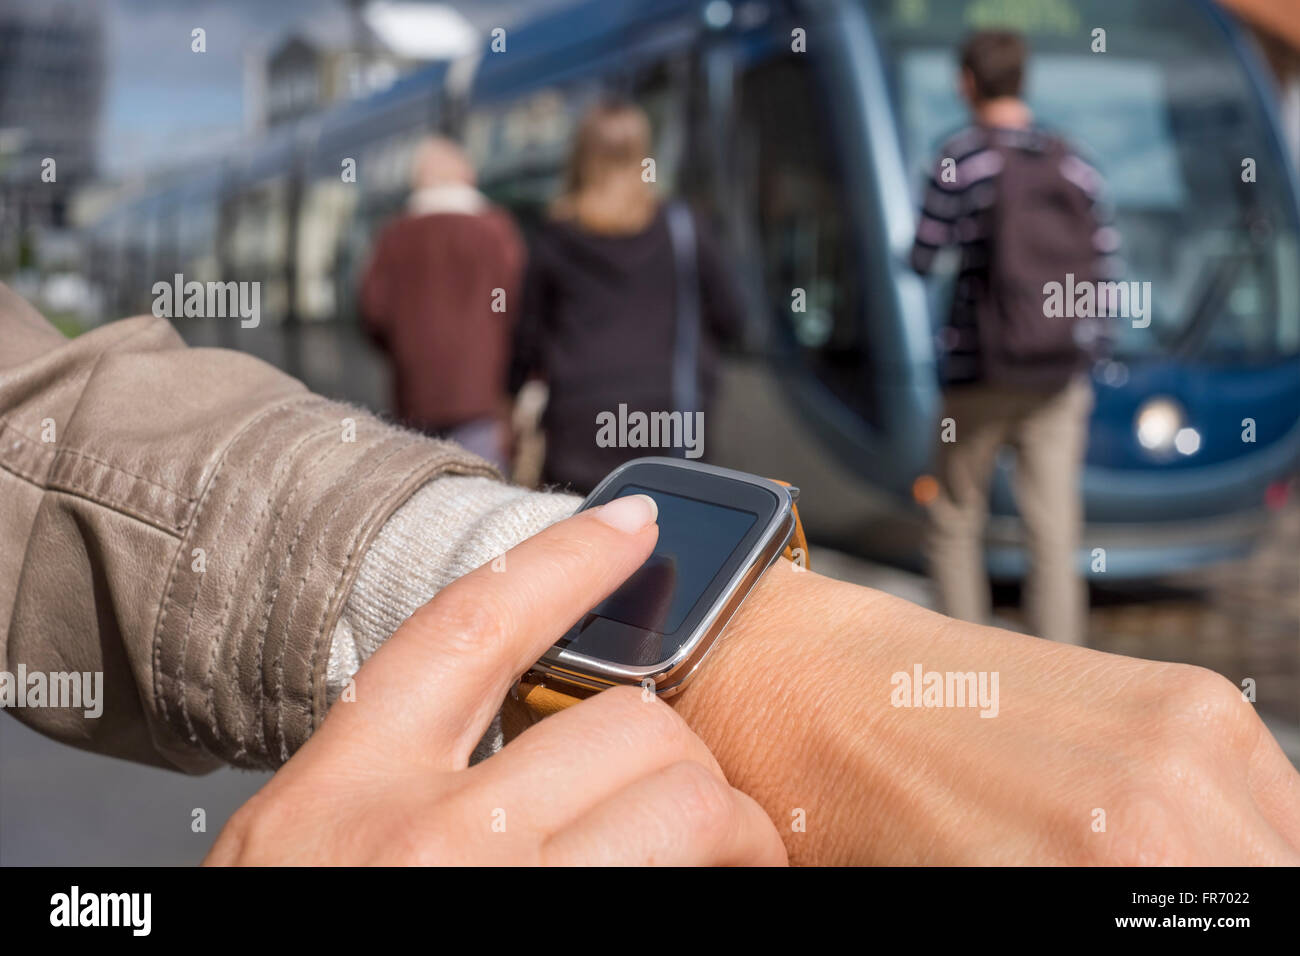 Female using her smartwatch on platform station tramway Stock Photo